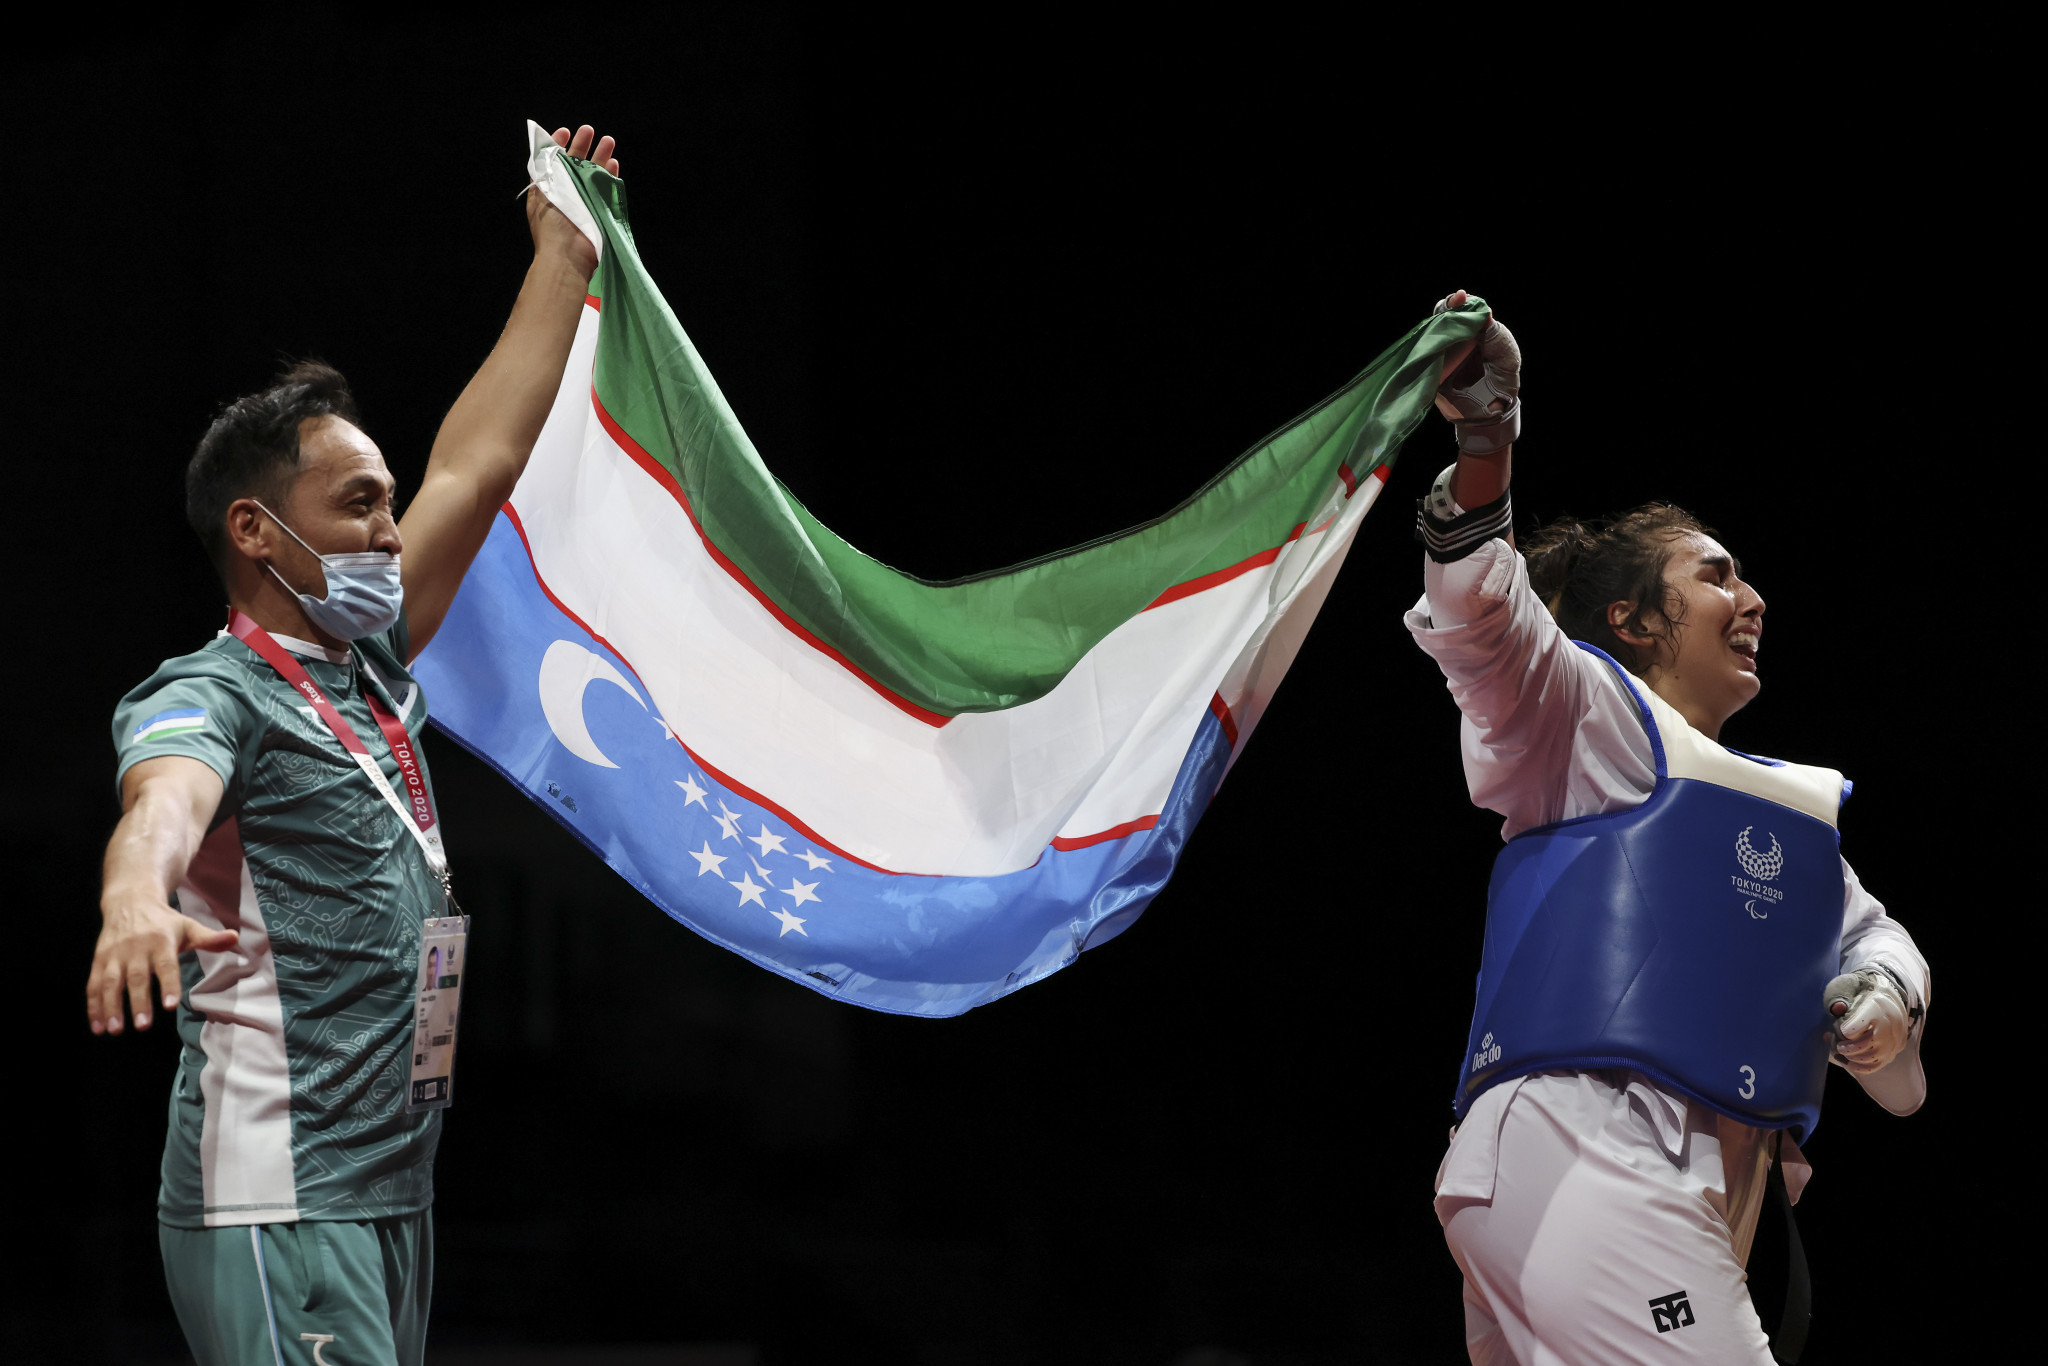 Guljonoy Naimova achieved gold once again at the Para taekwondo Grand Prix ©Getty Images